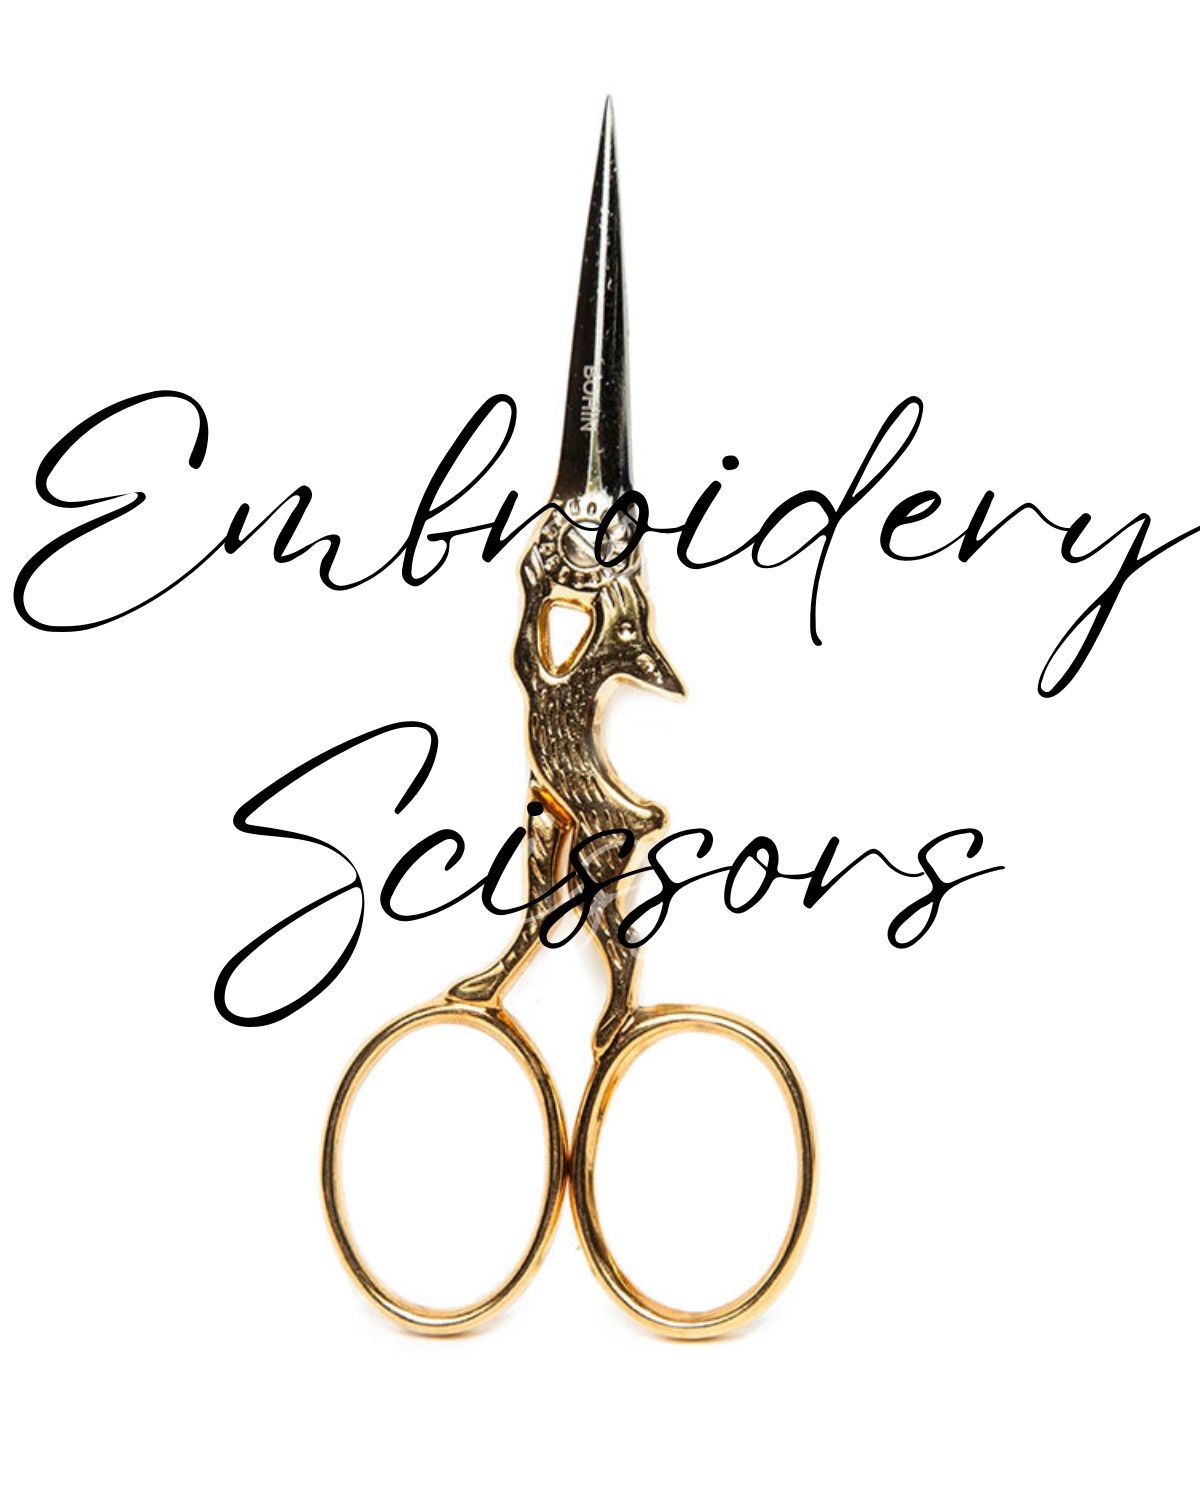 A pair of golden scissors